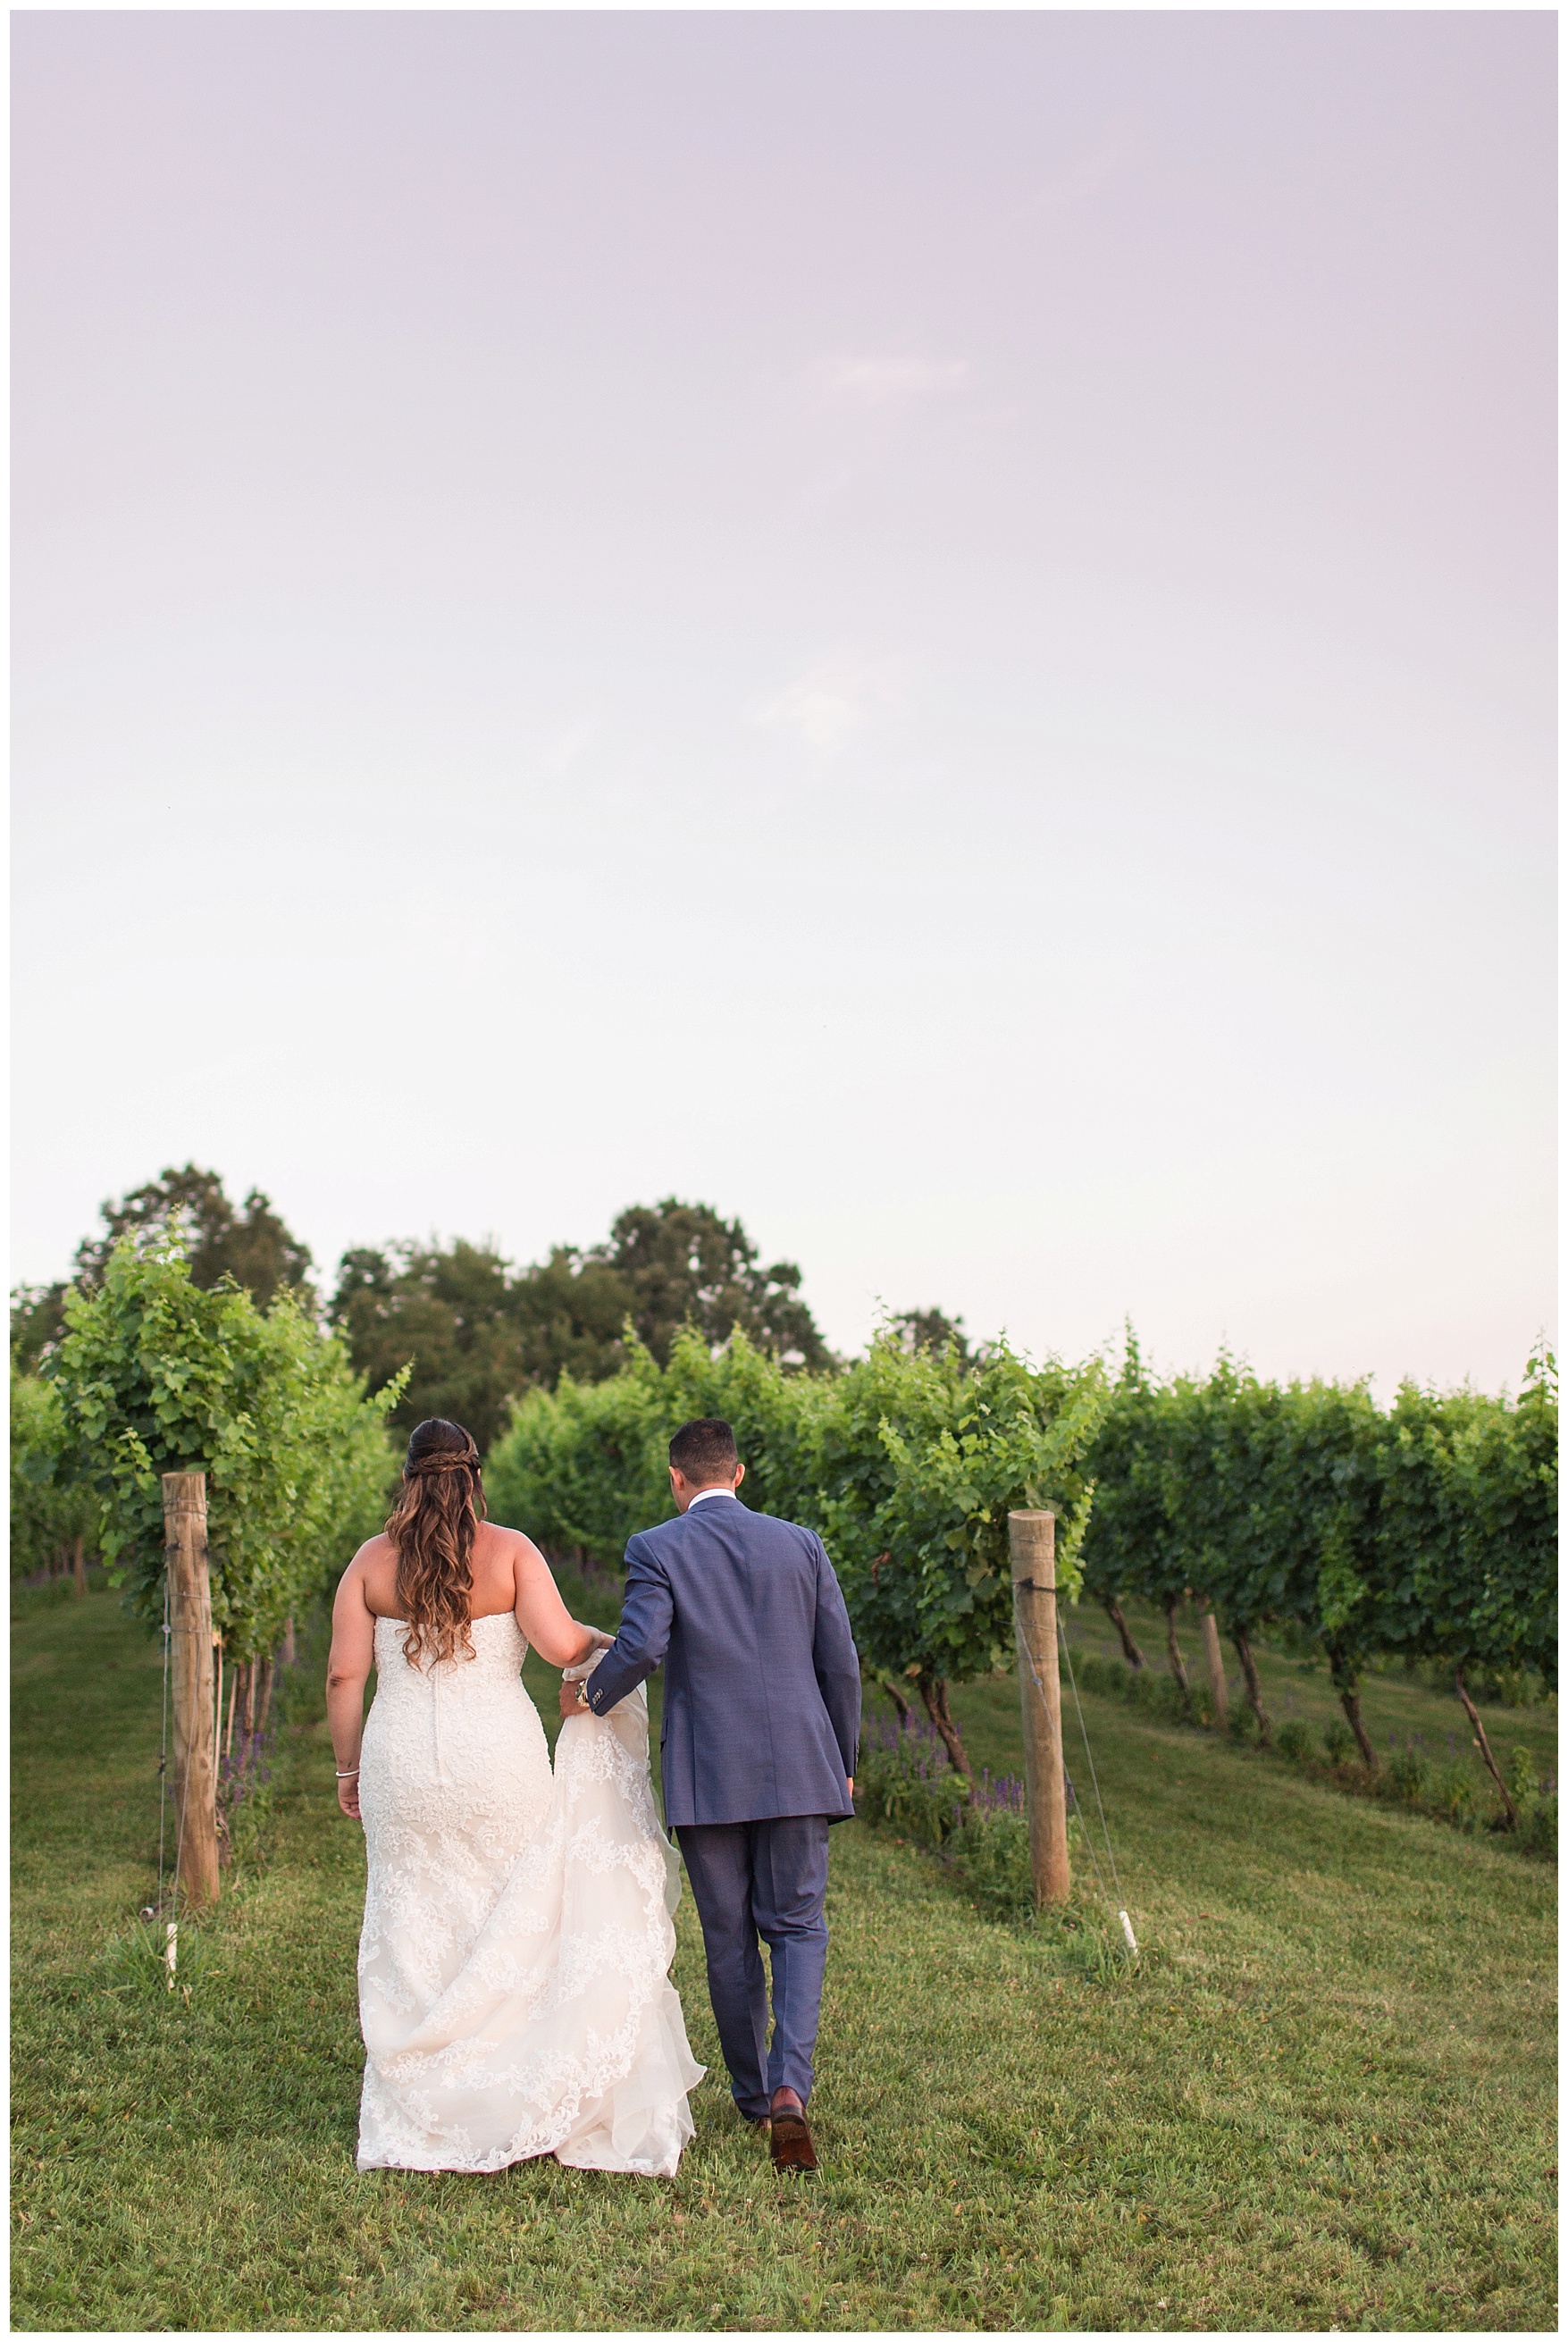 Pippin Hill Farm & Vineyard Wedding in Charlottesville, Virginia || Lynchburg and Charlottesville Wedding Photographer || Summer vineyard wedding in Central Virginia